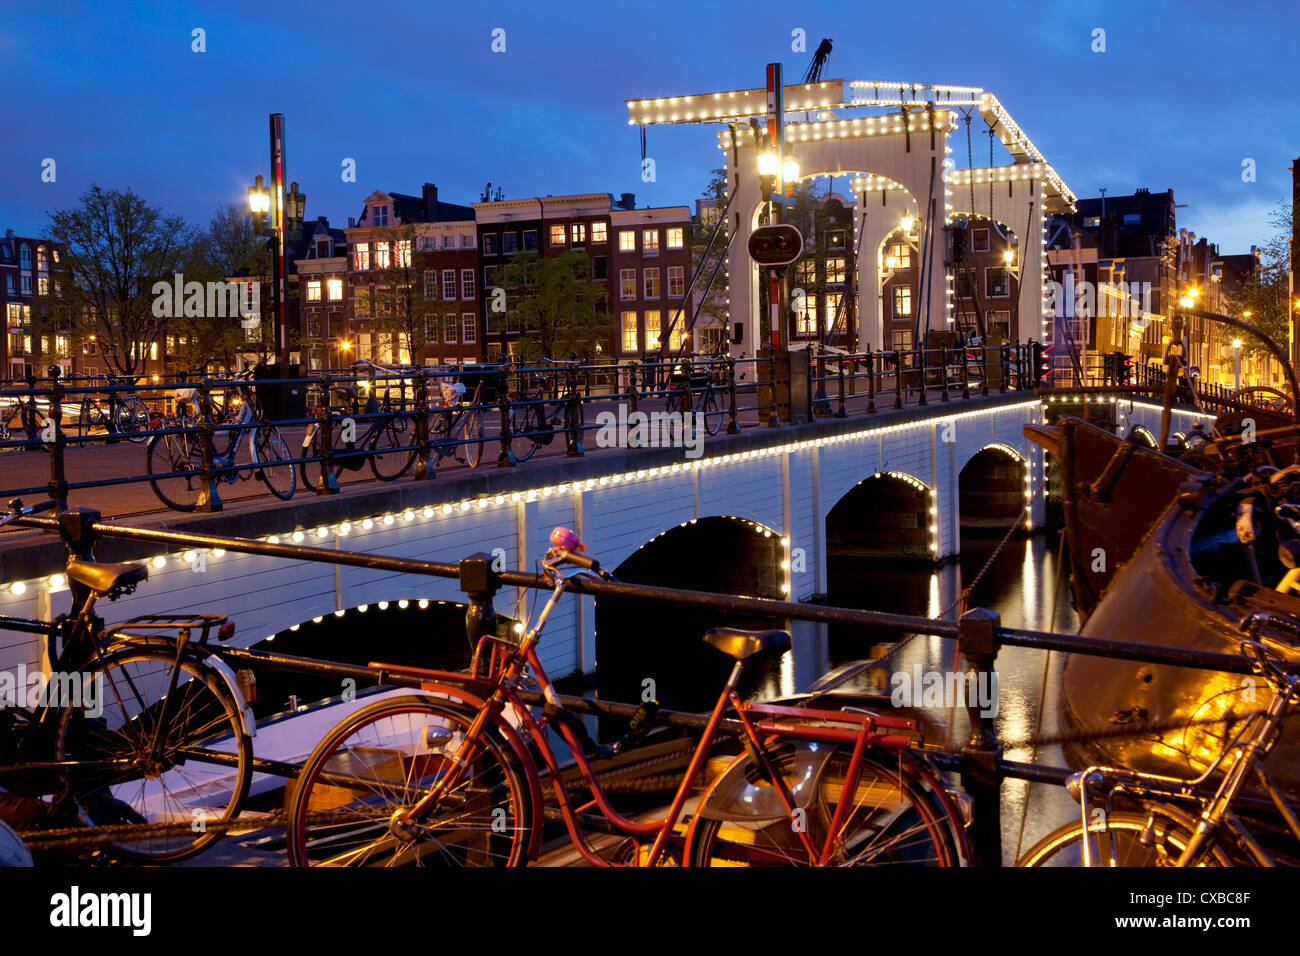 Magere Brug (Skinny Bridge) at dusk, Amsterdam, Holland, Europe Stock Photo